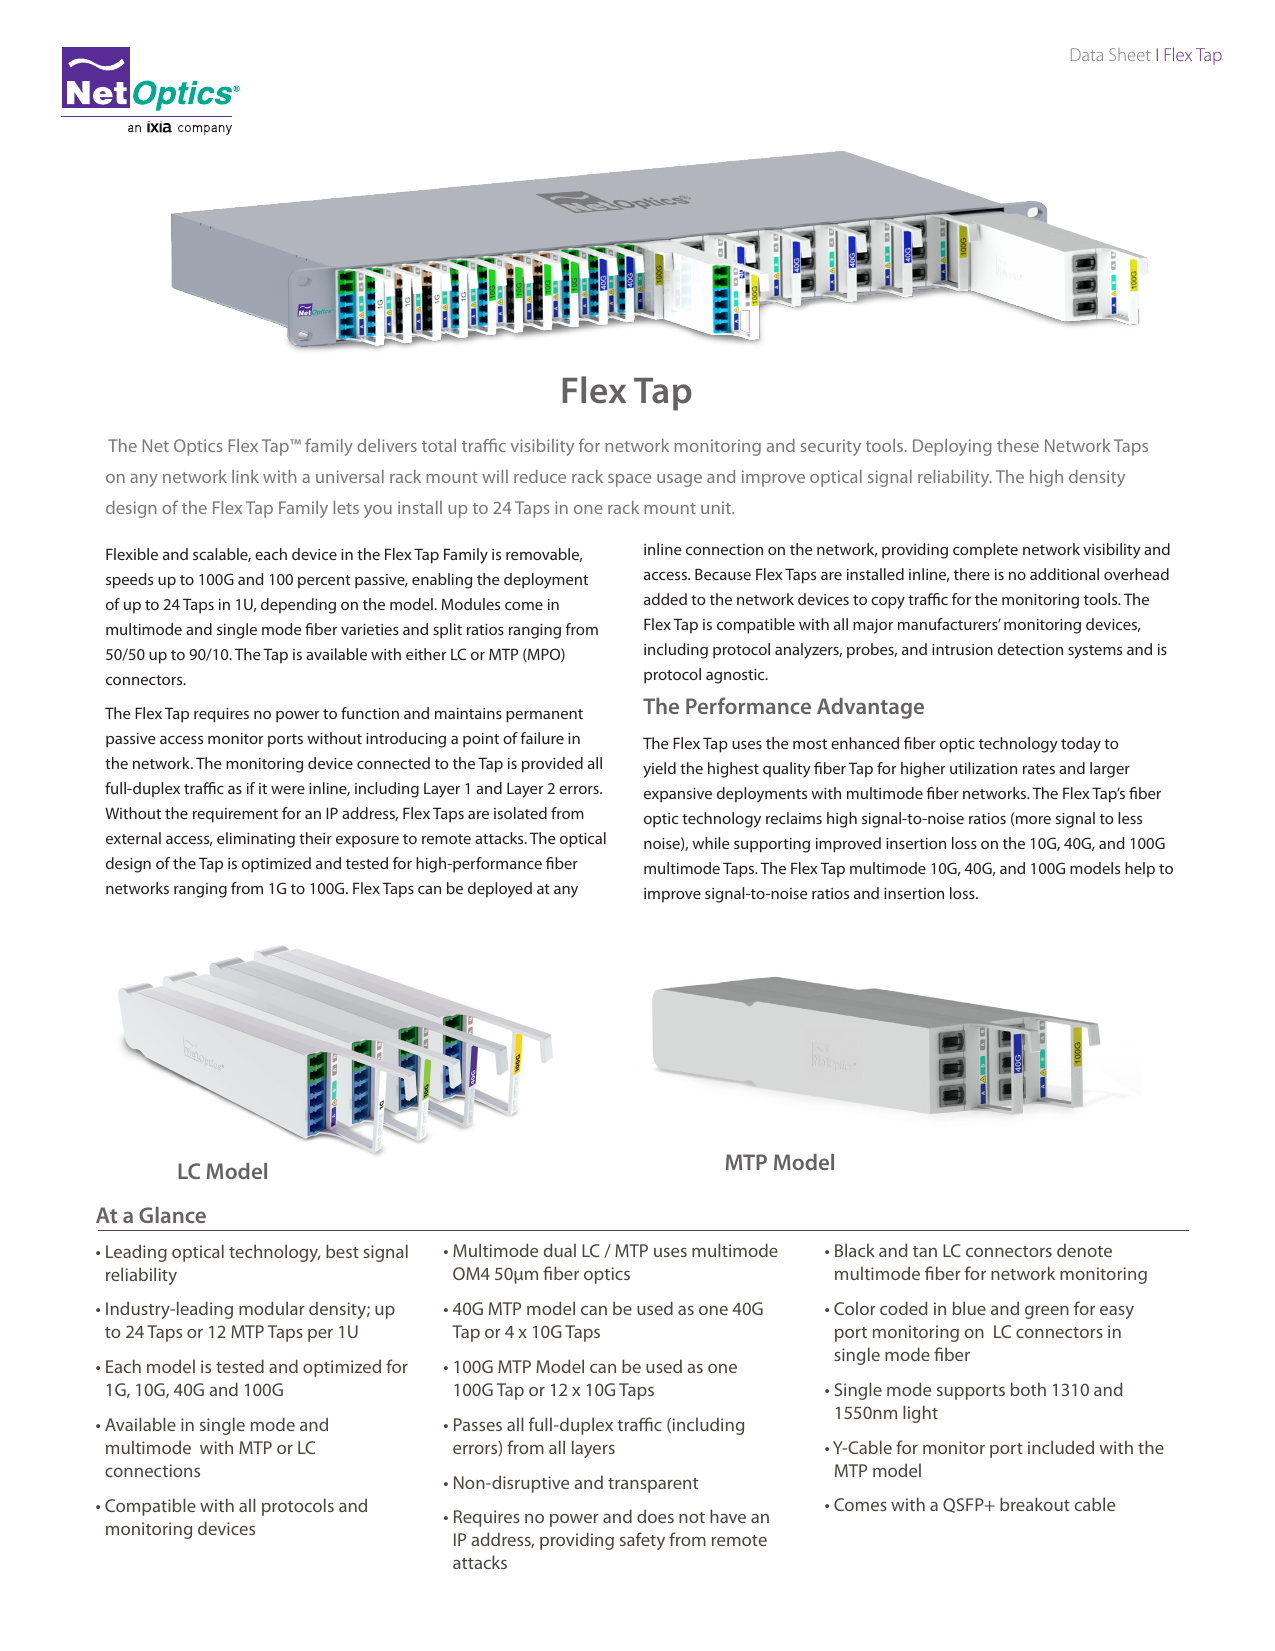 Flex Tap Frame Communications Ltd Manualzz